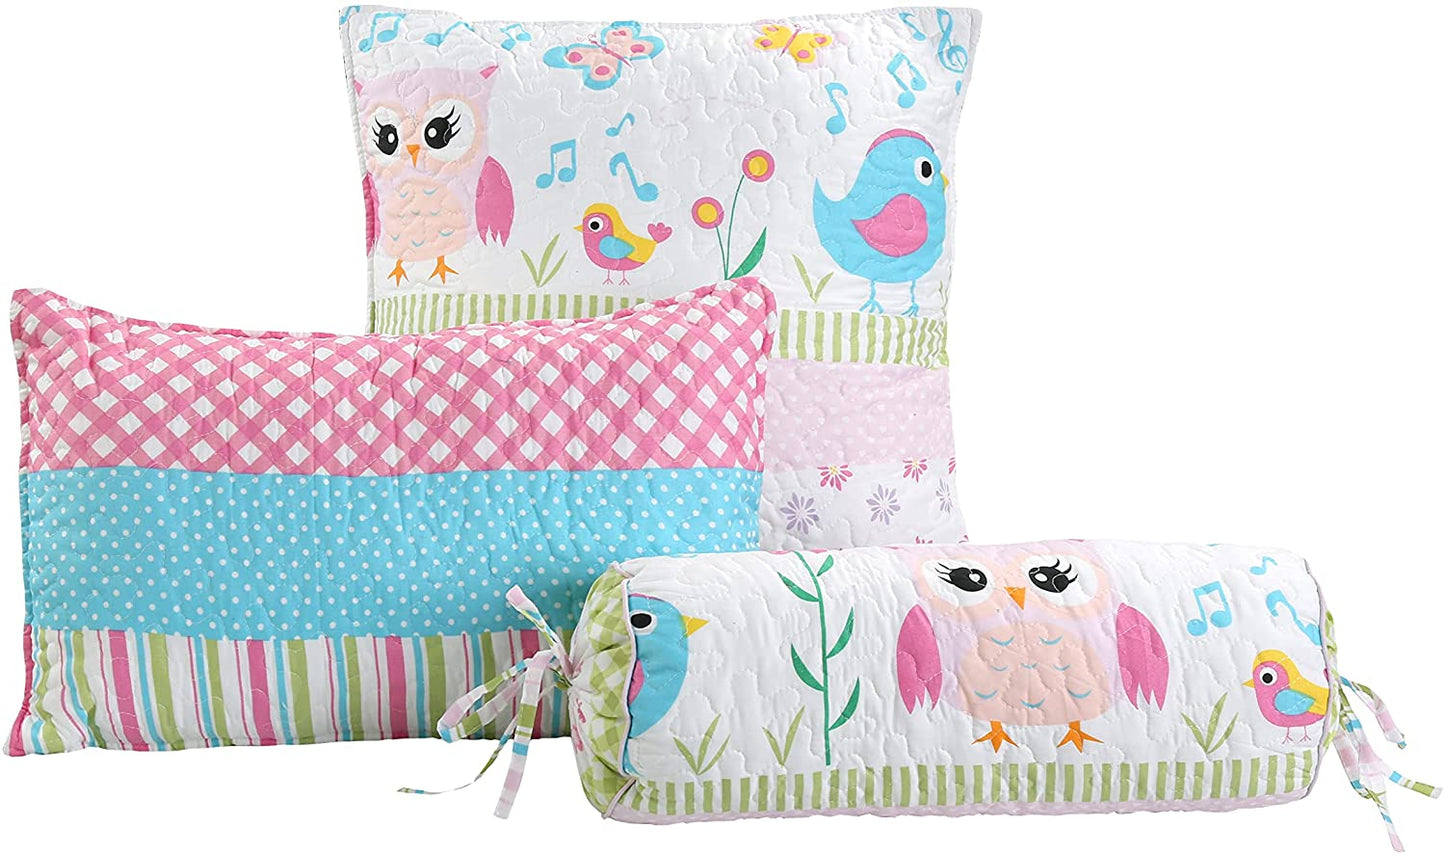 Home Sweet Pink Owl Print Stripe Girl Reversible Quilt Bedding Set